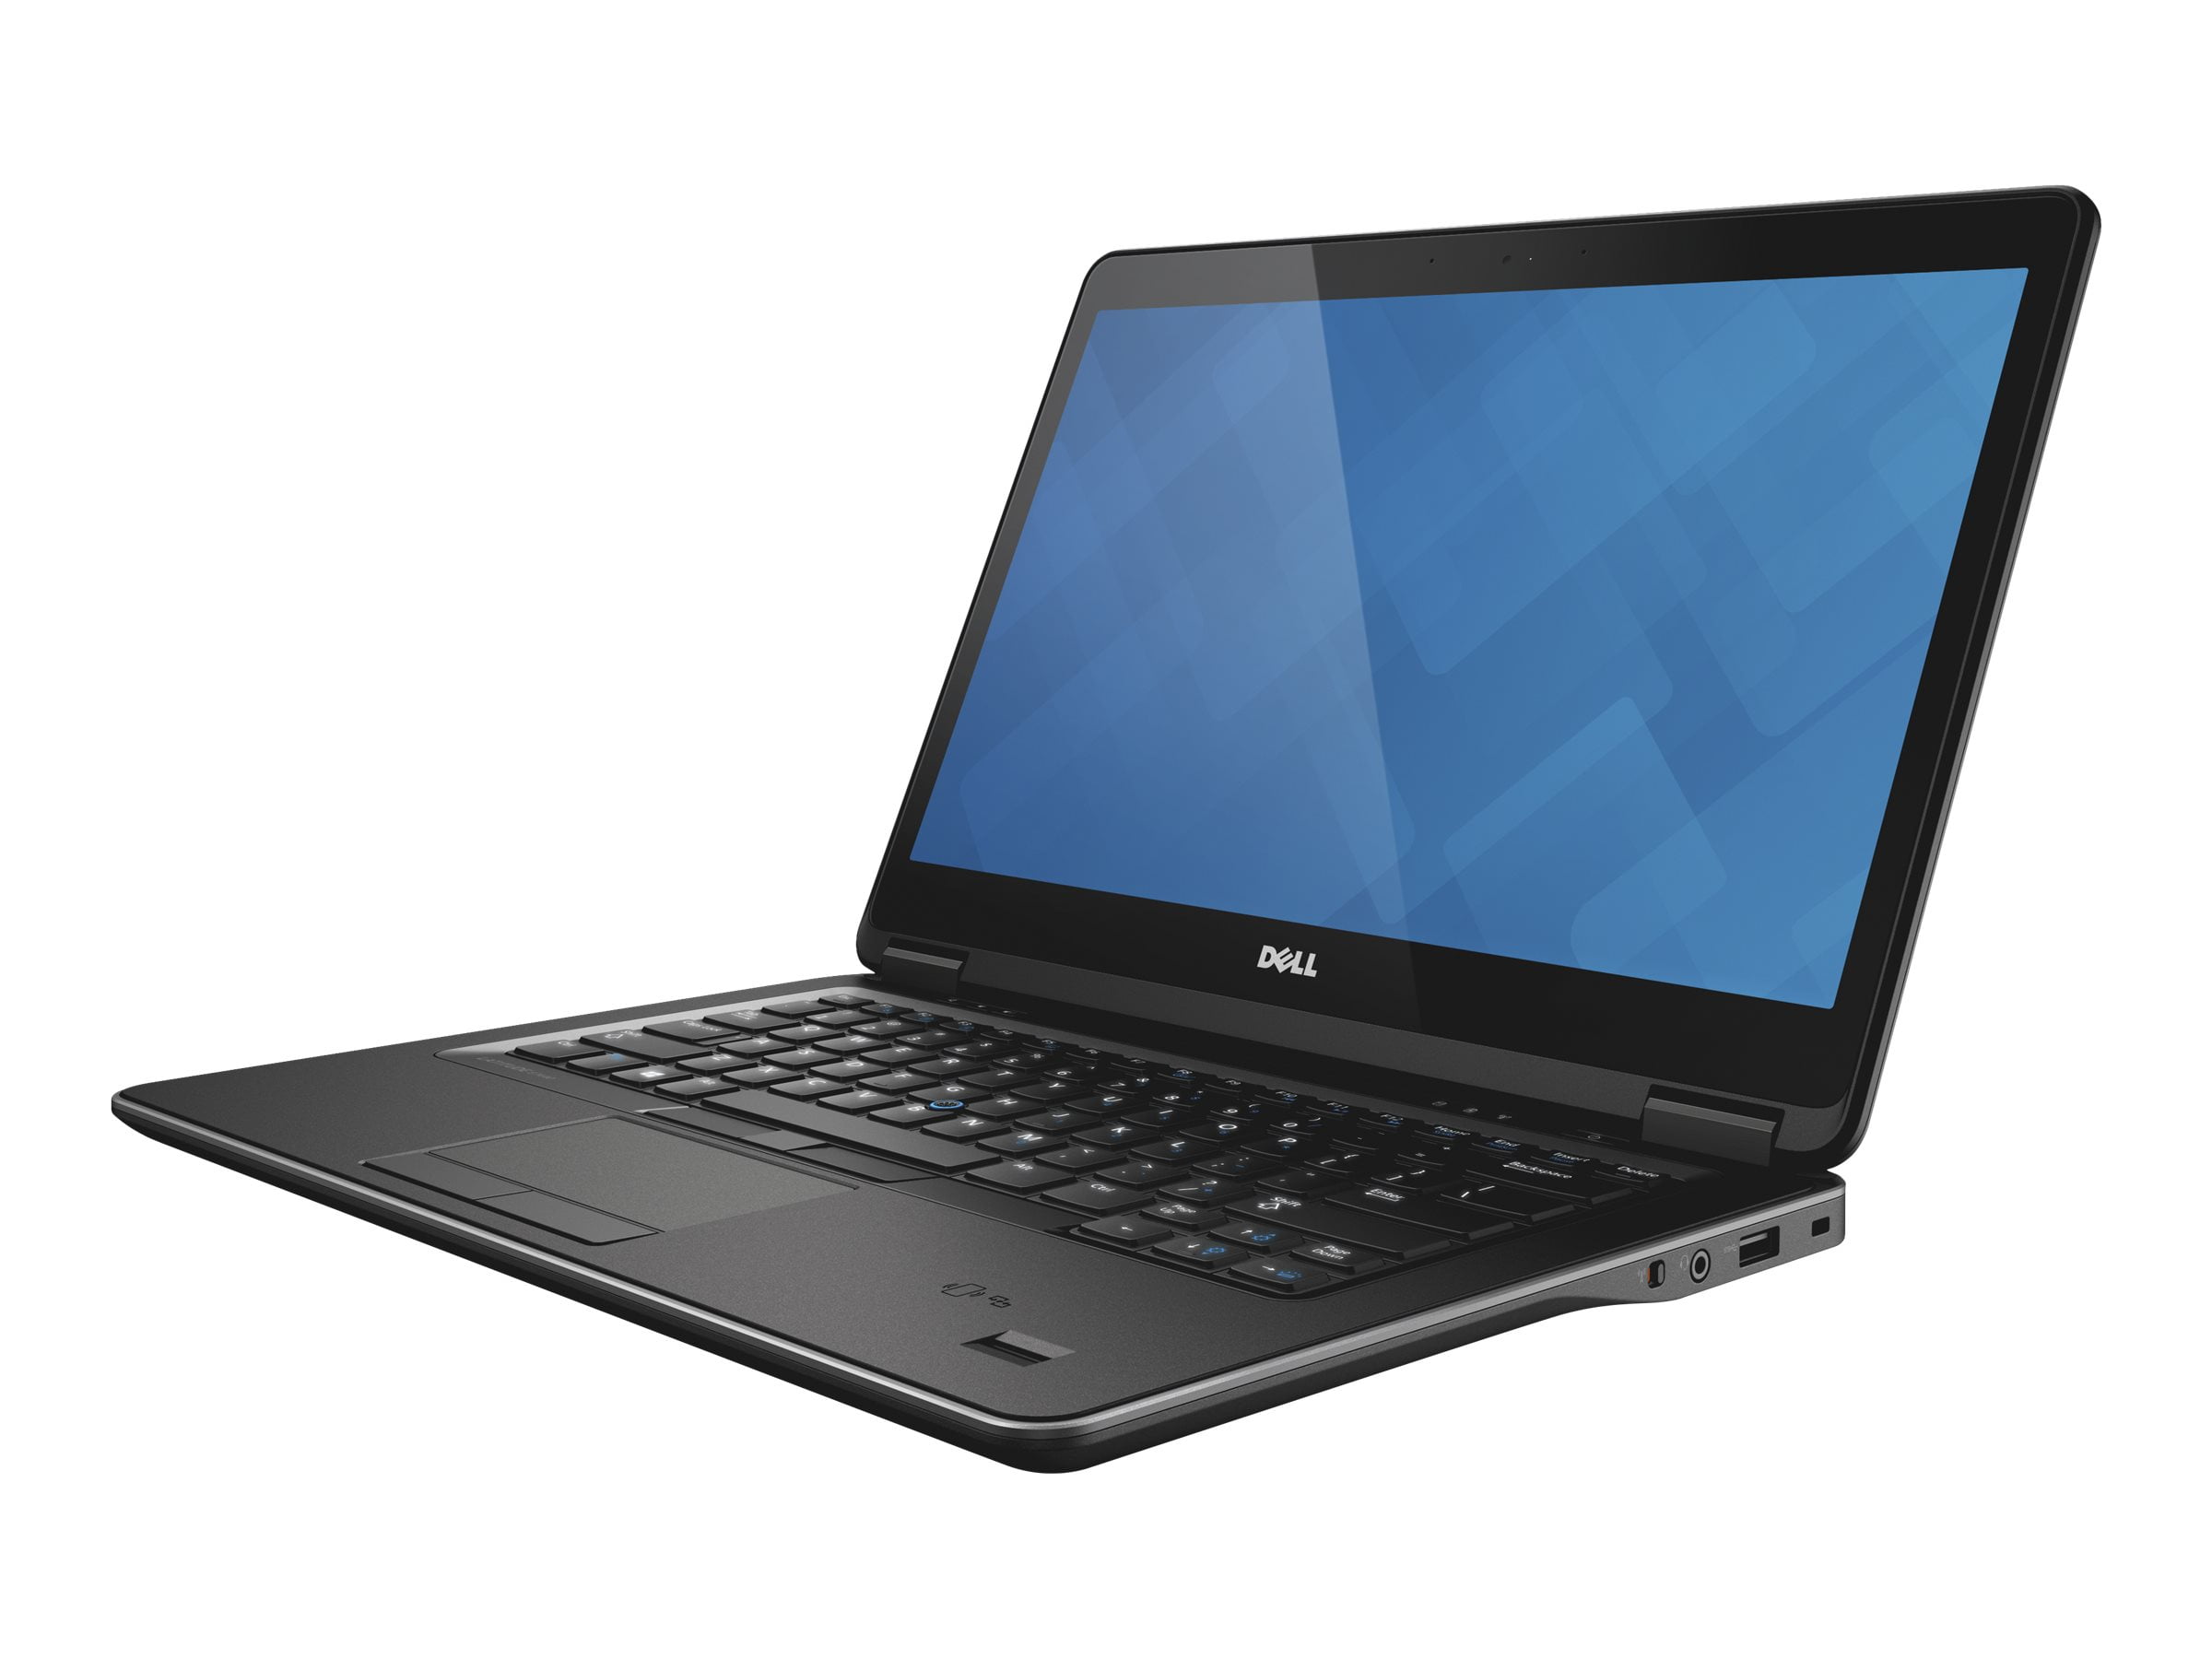 HP EliteBook 2560p Intel i7 2.7ghz 8gb 500gb HDD 1366x768 webcam BT WIN 10/7 Pro 